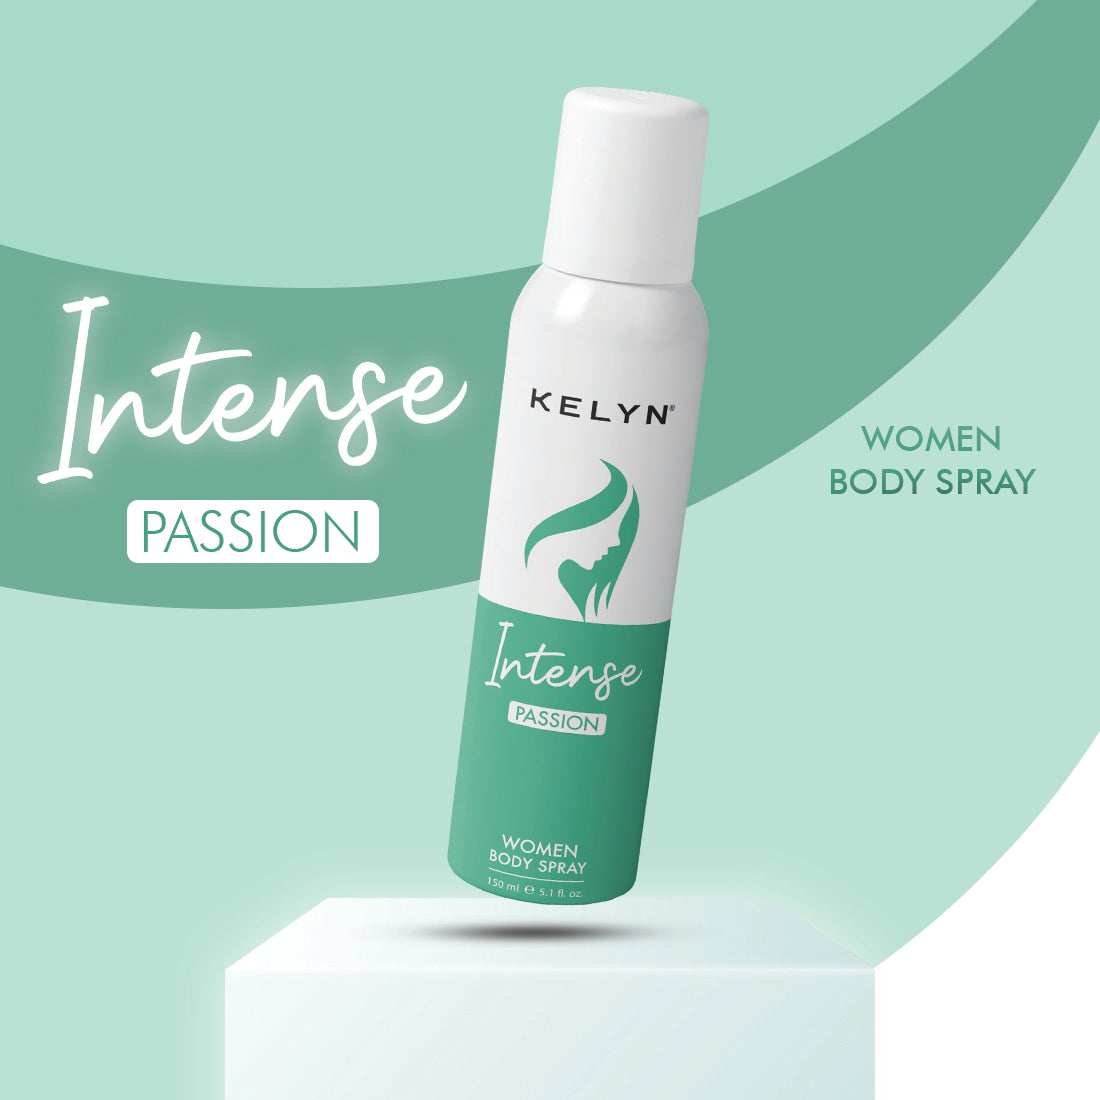 Intense Passion Deodorant for Women Body Spray, 150 ml